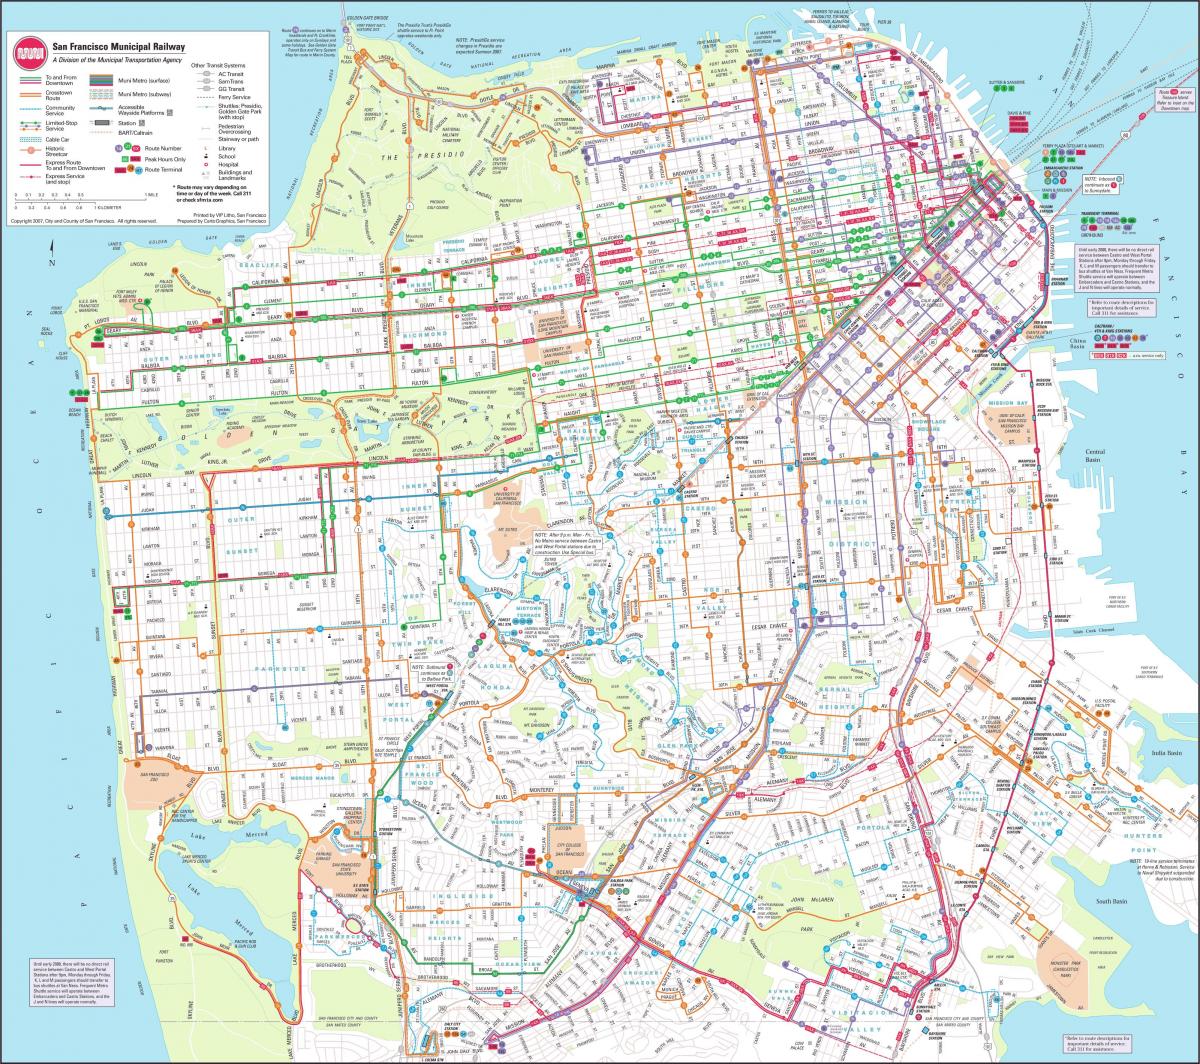 Karta za San Francisco općinske željezničke